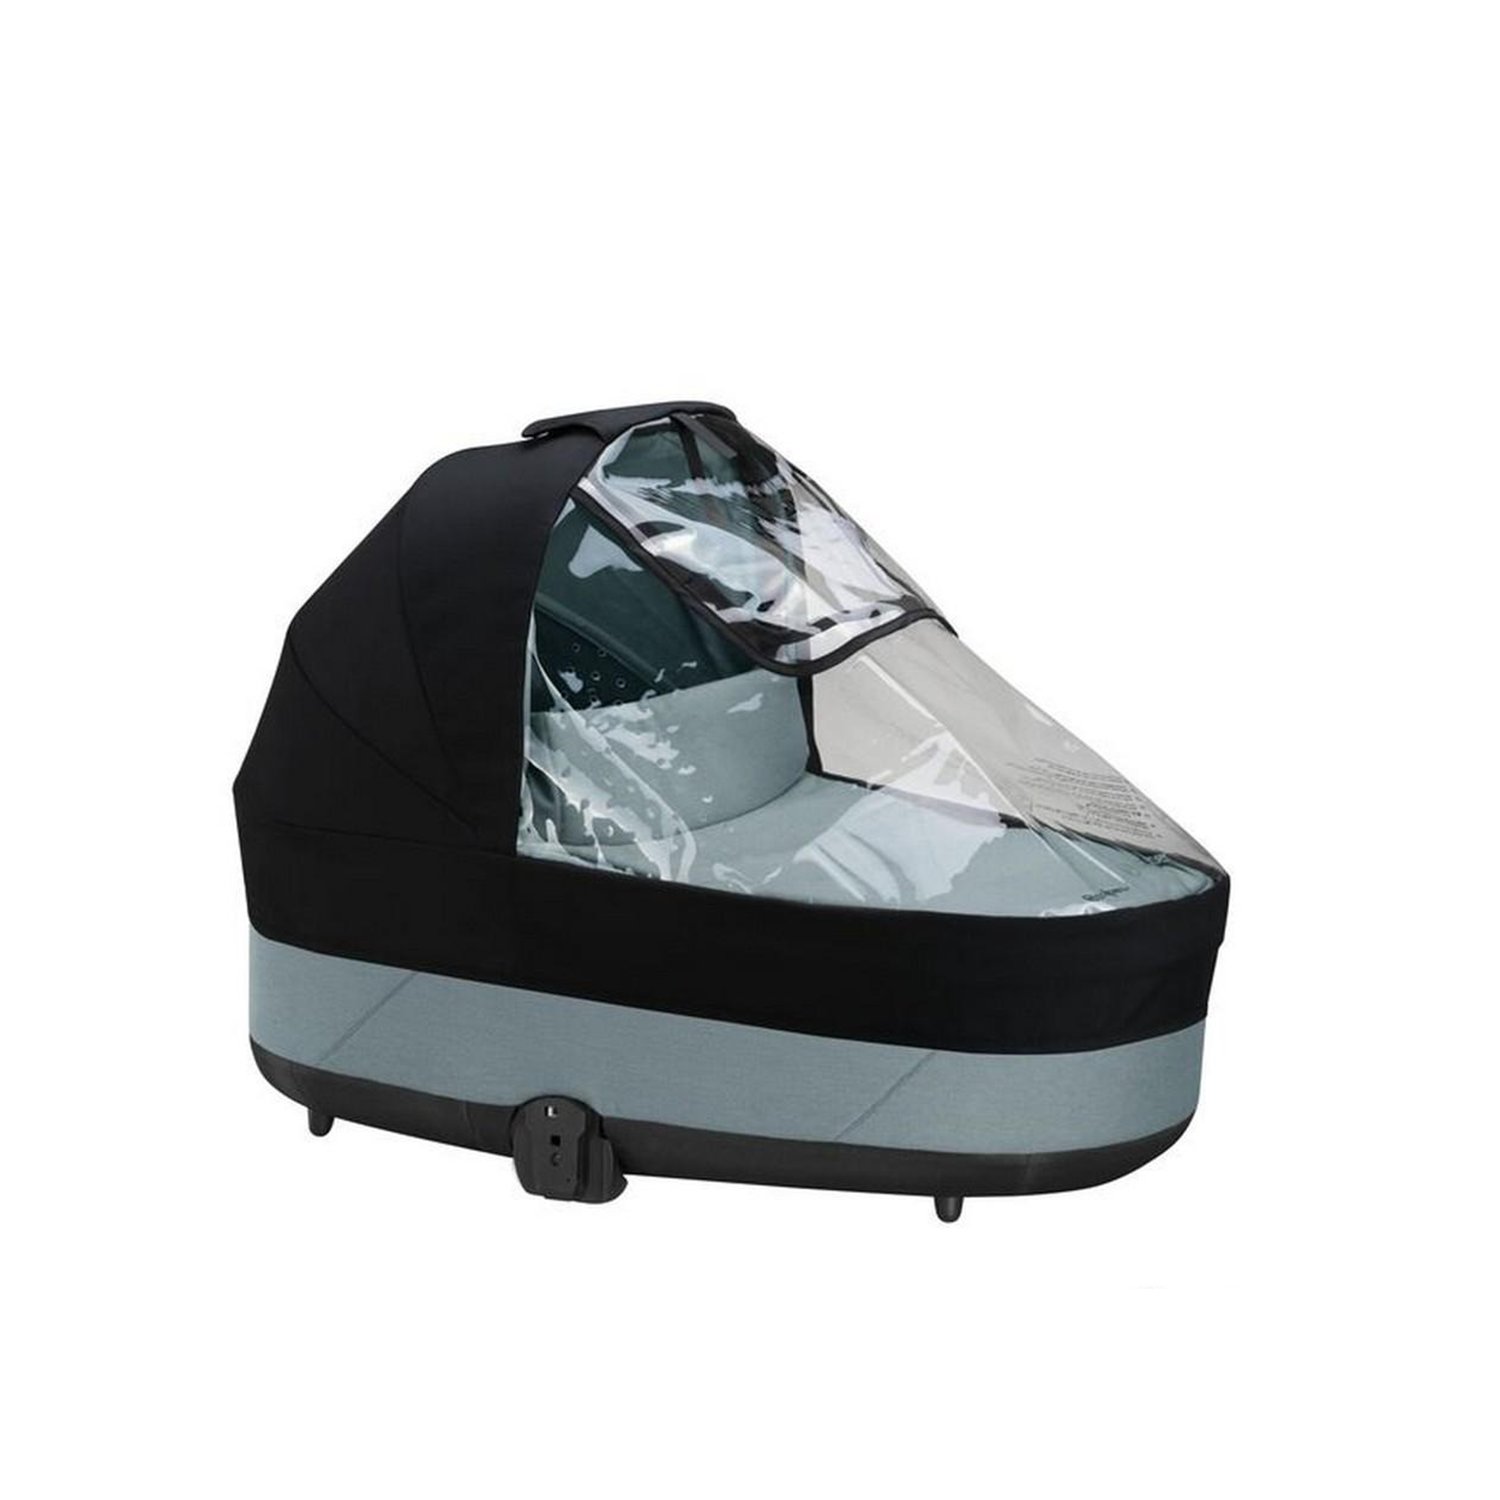 Дождевик CYBEX для спального блока коляски Balios S Lux